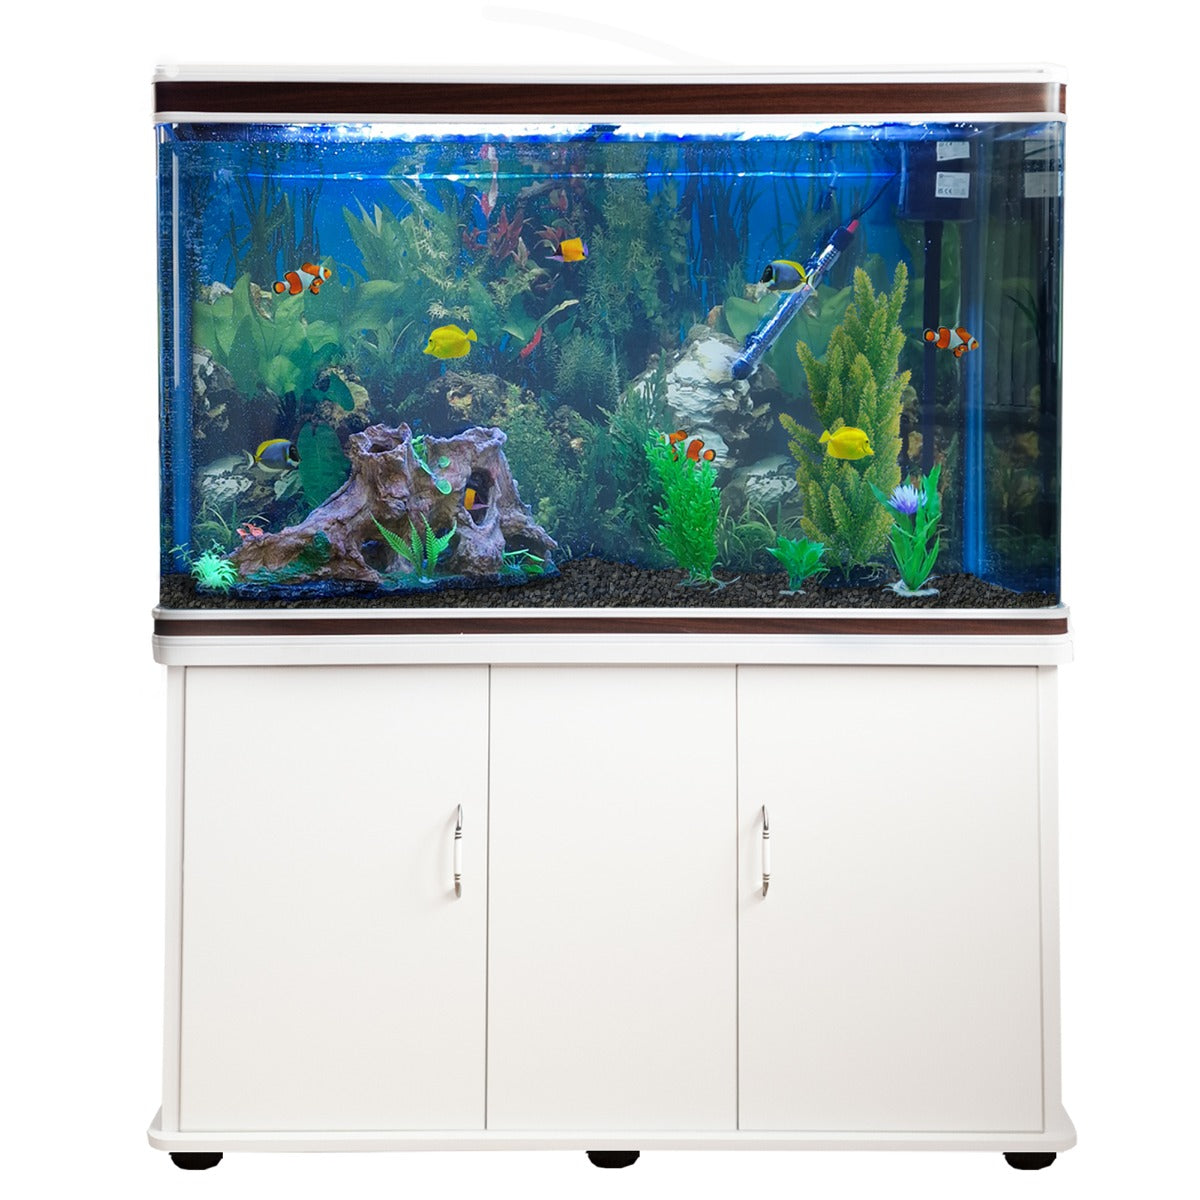 Aquarium Fish Tank &amp; Cabinet with Complete Starter Kit - White Tank &amp; Black Gravel